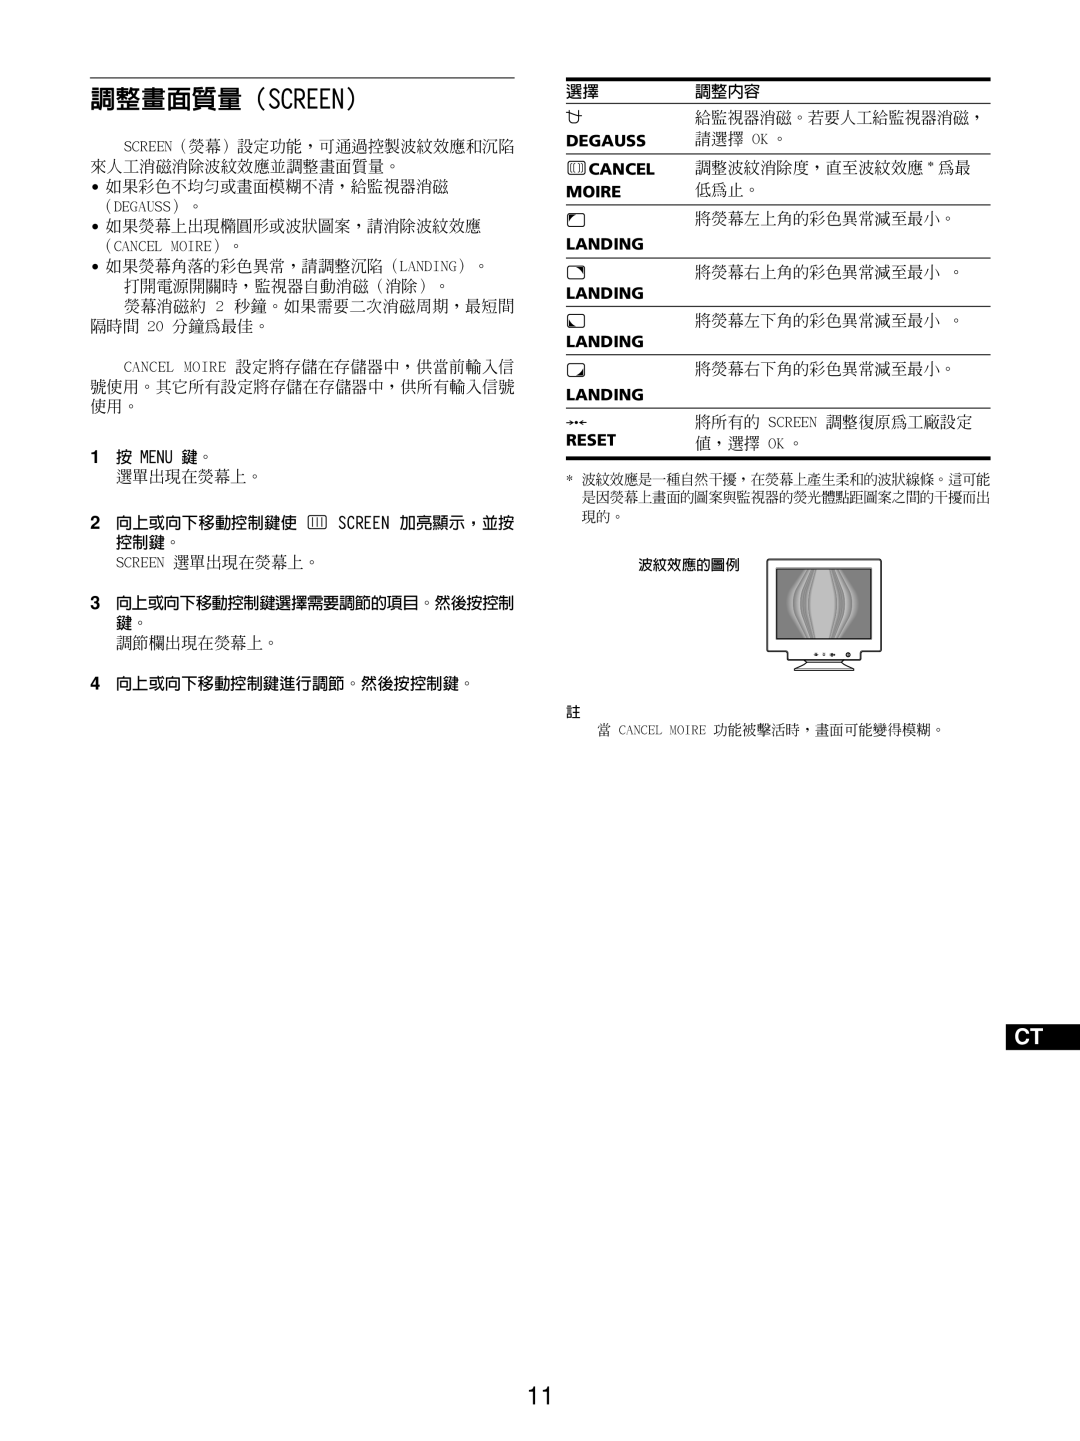 Sony GDM-5510 operating instructions 調整畫面質量（Screen）, 1 按 MENU 鍵。, Degauss, Cancel, Moire, Landing, Reset 